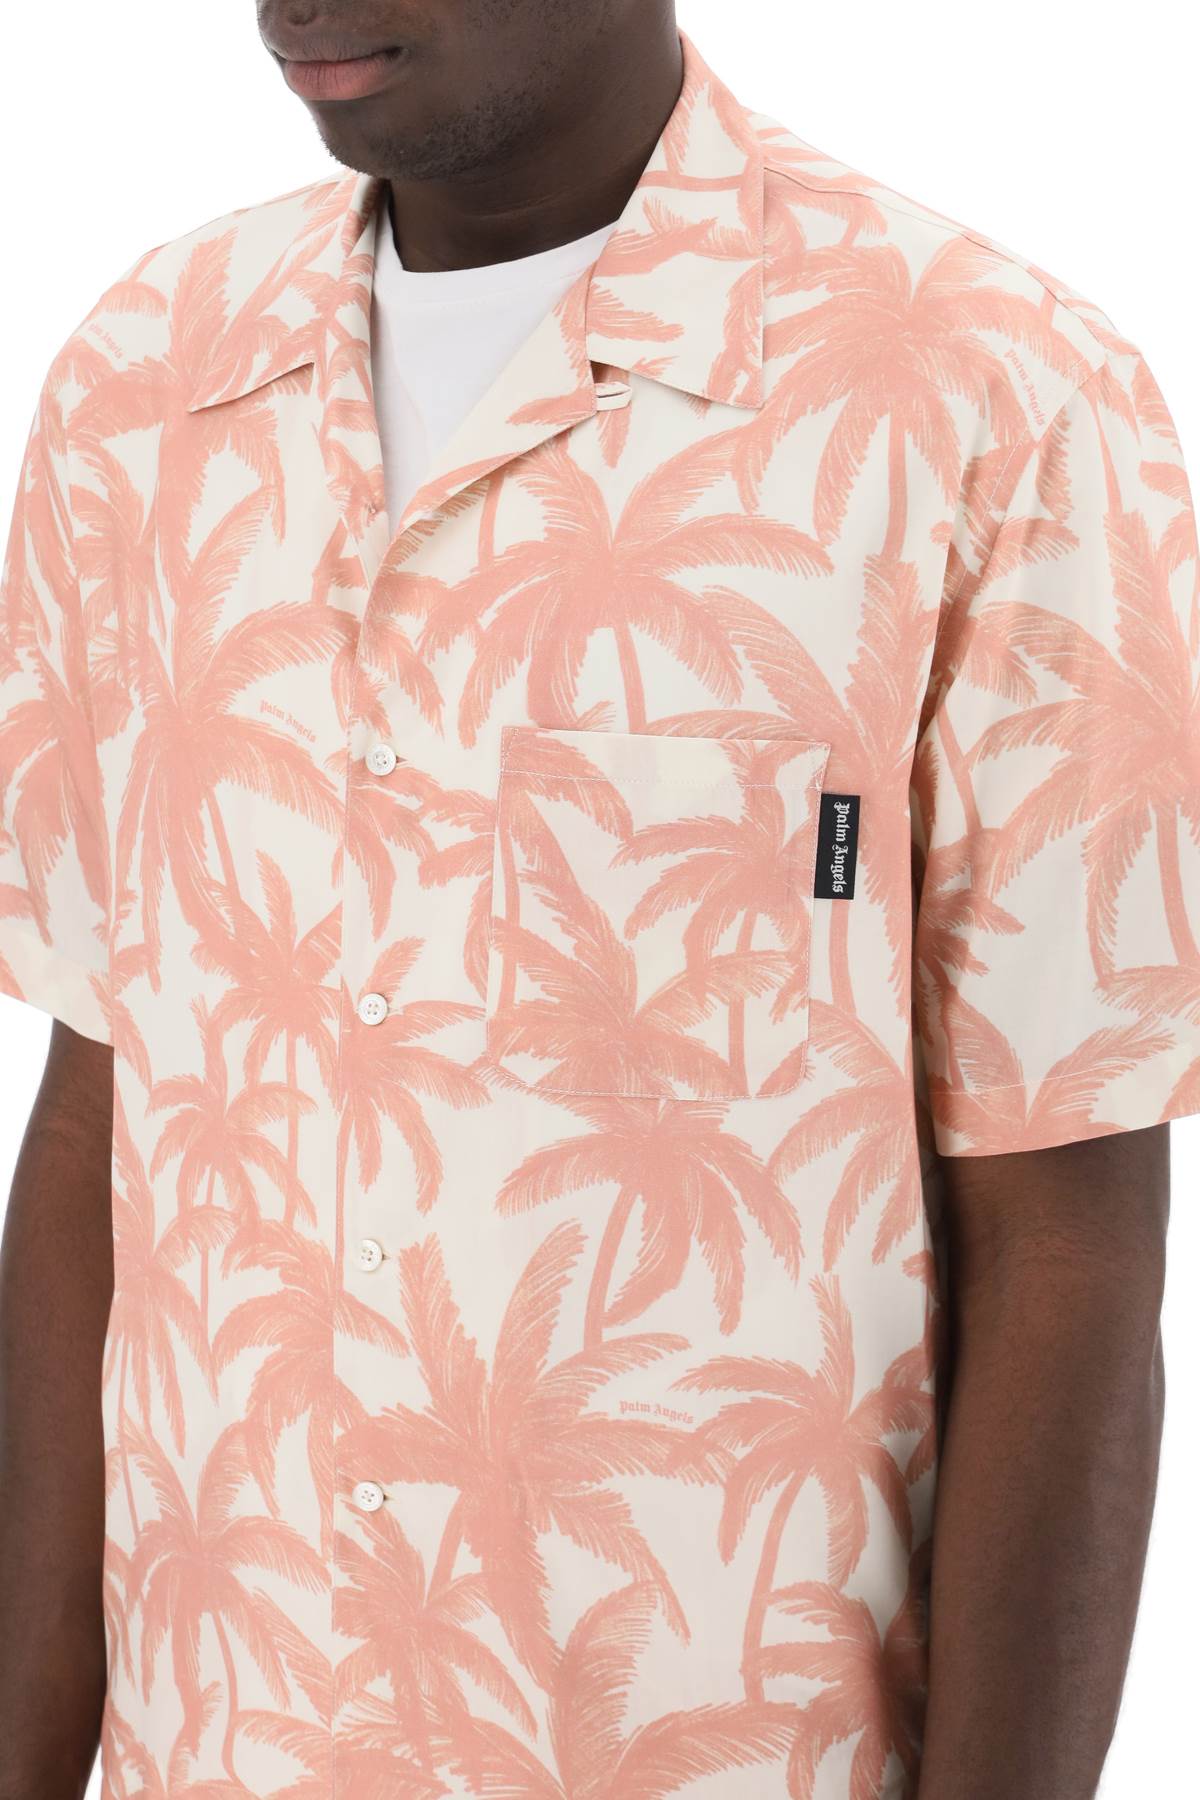 Palm angels bowling shirt with palms motif-3